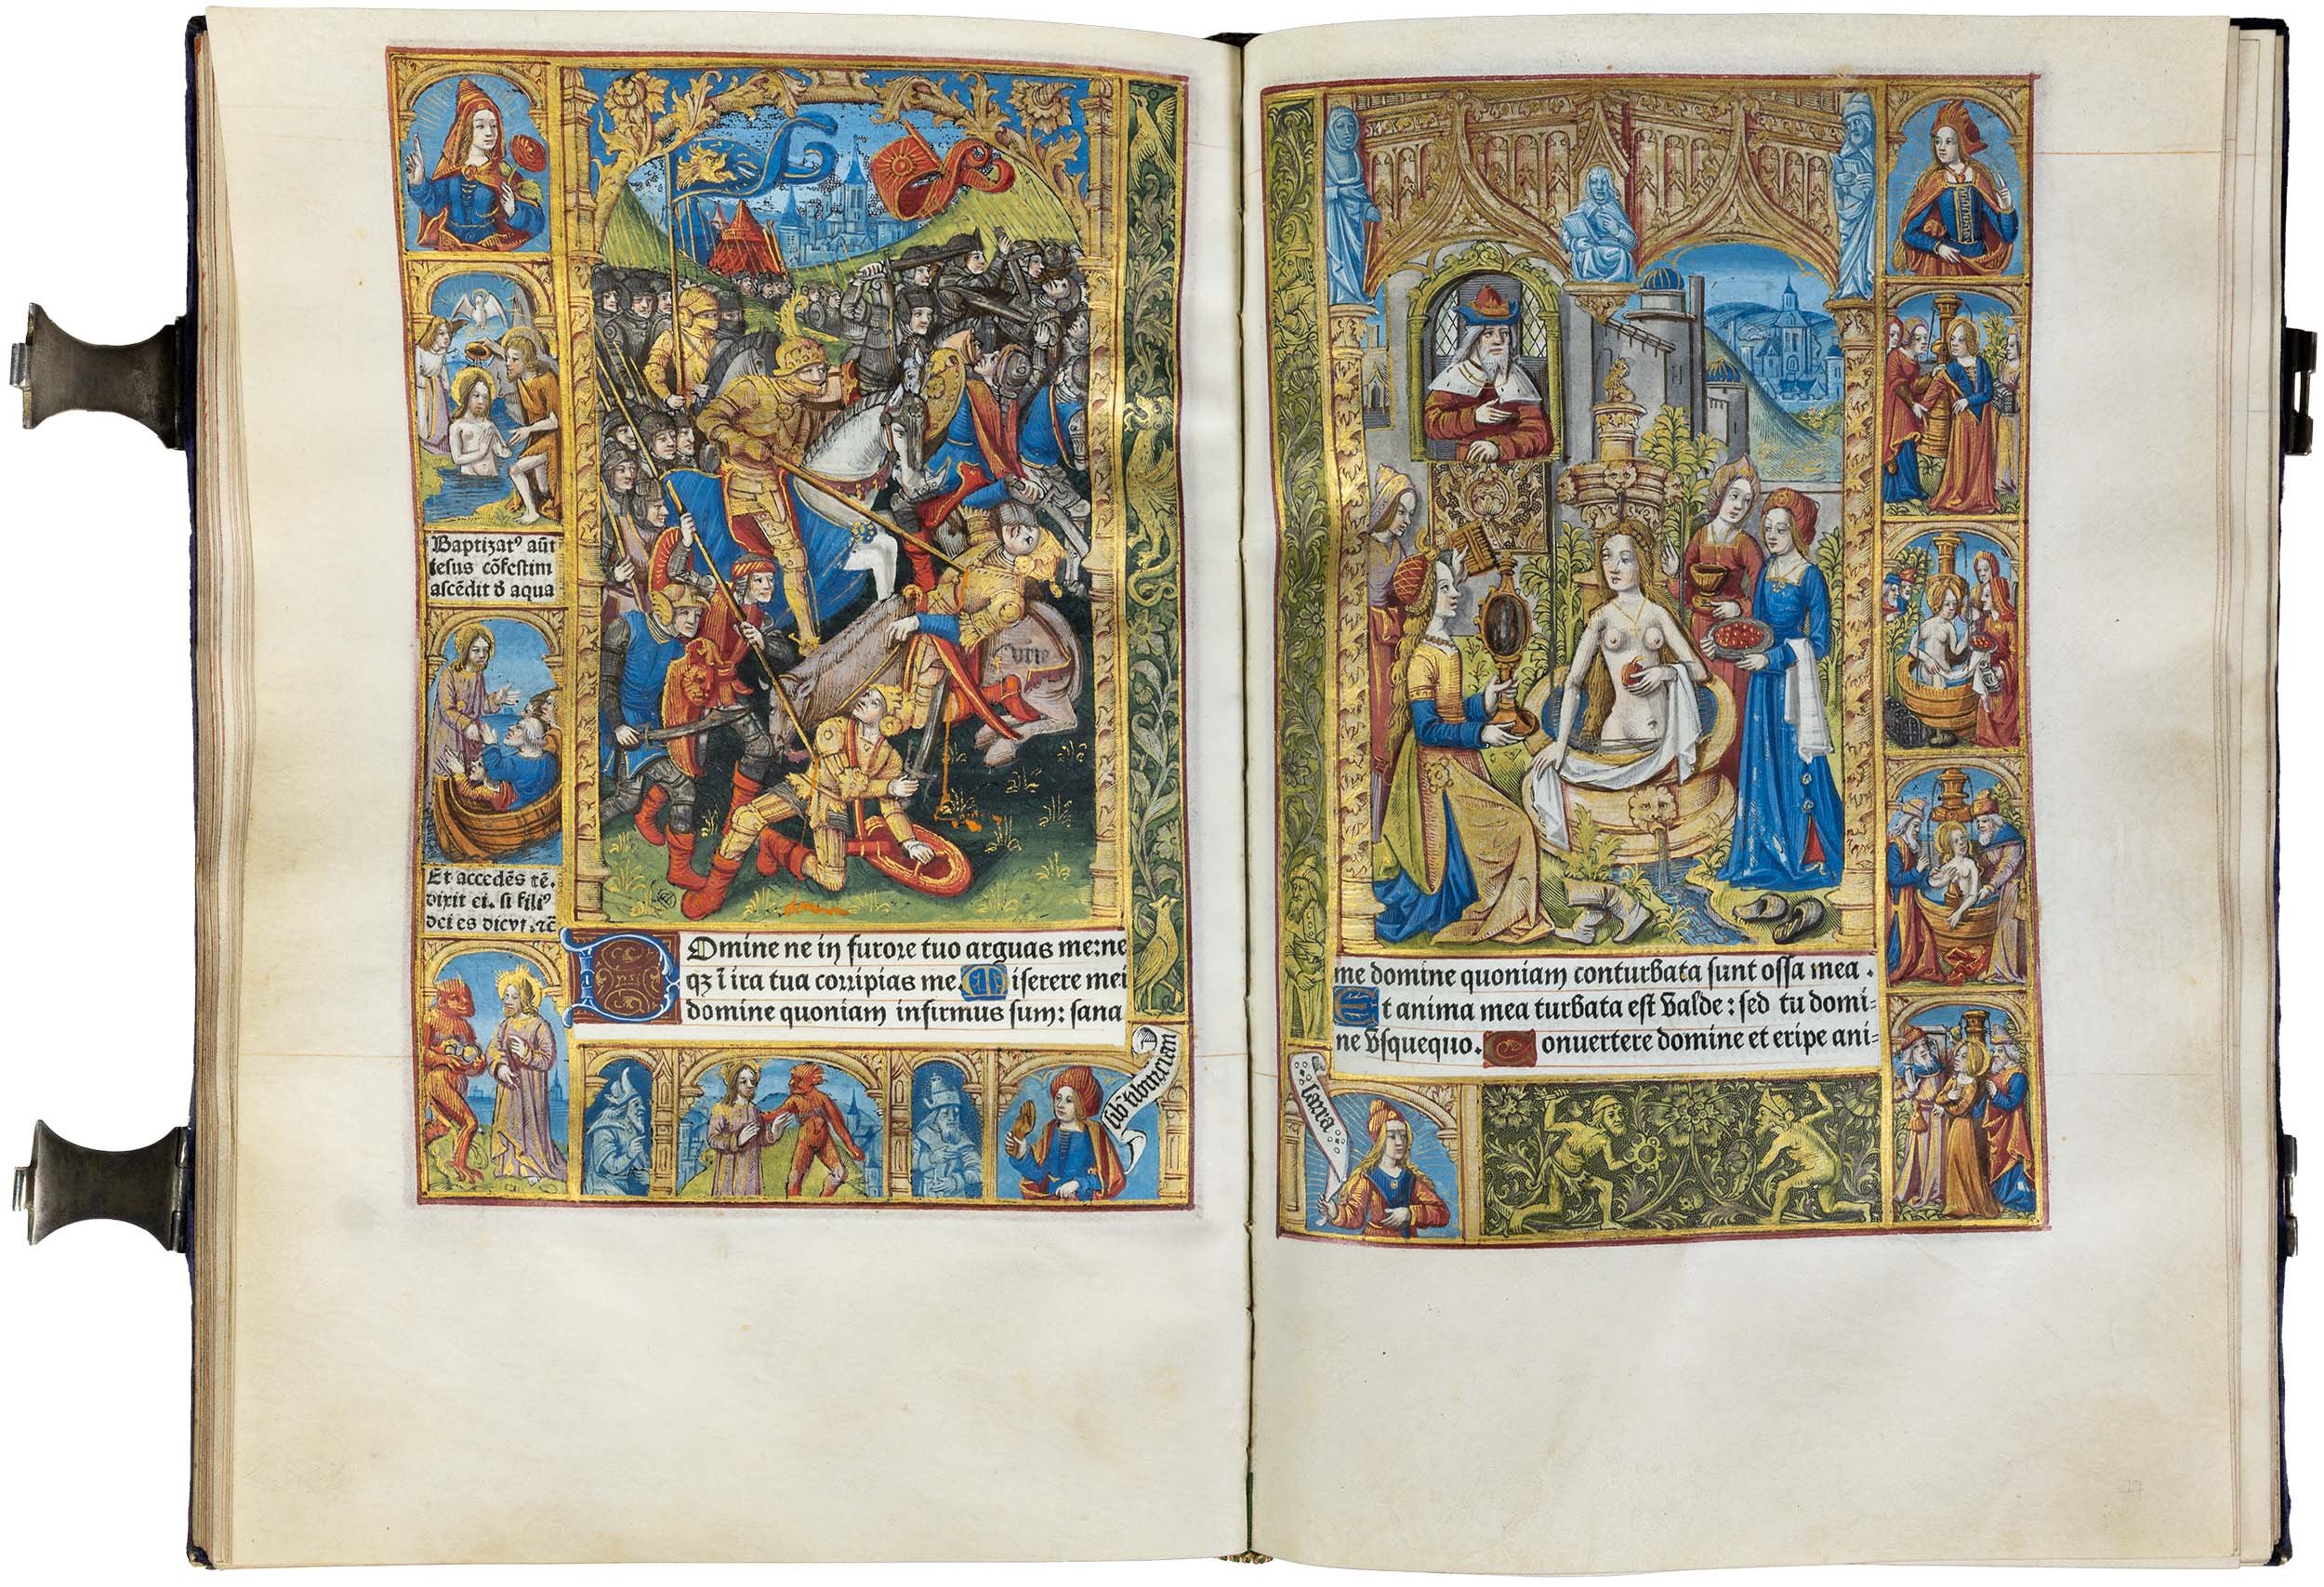 horae-bmv-16.9.1498-printed-book-of-hours-pigouchet-vostre-calixto crotus-illuminated-vellum-doheny-arcana-40.jpg